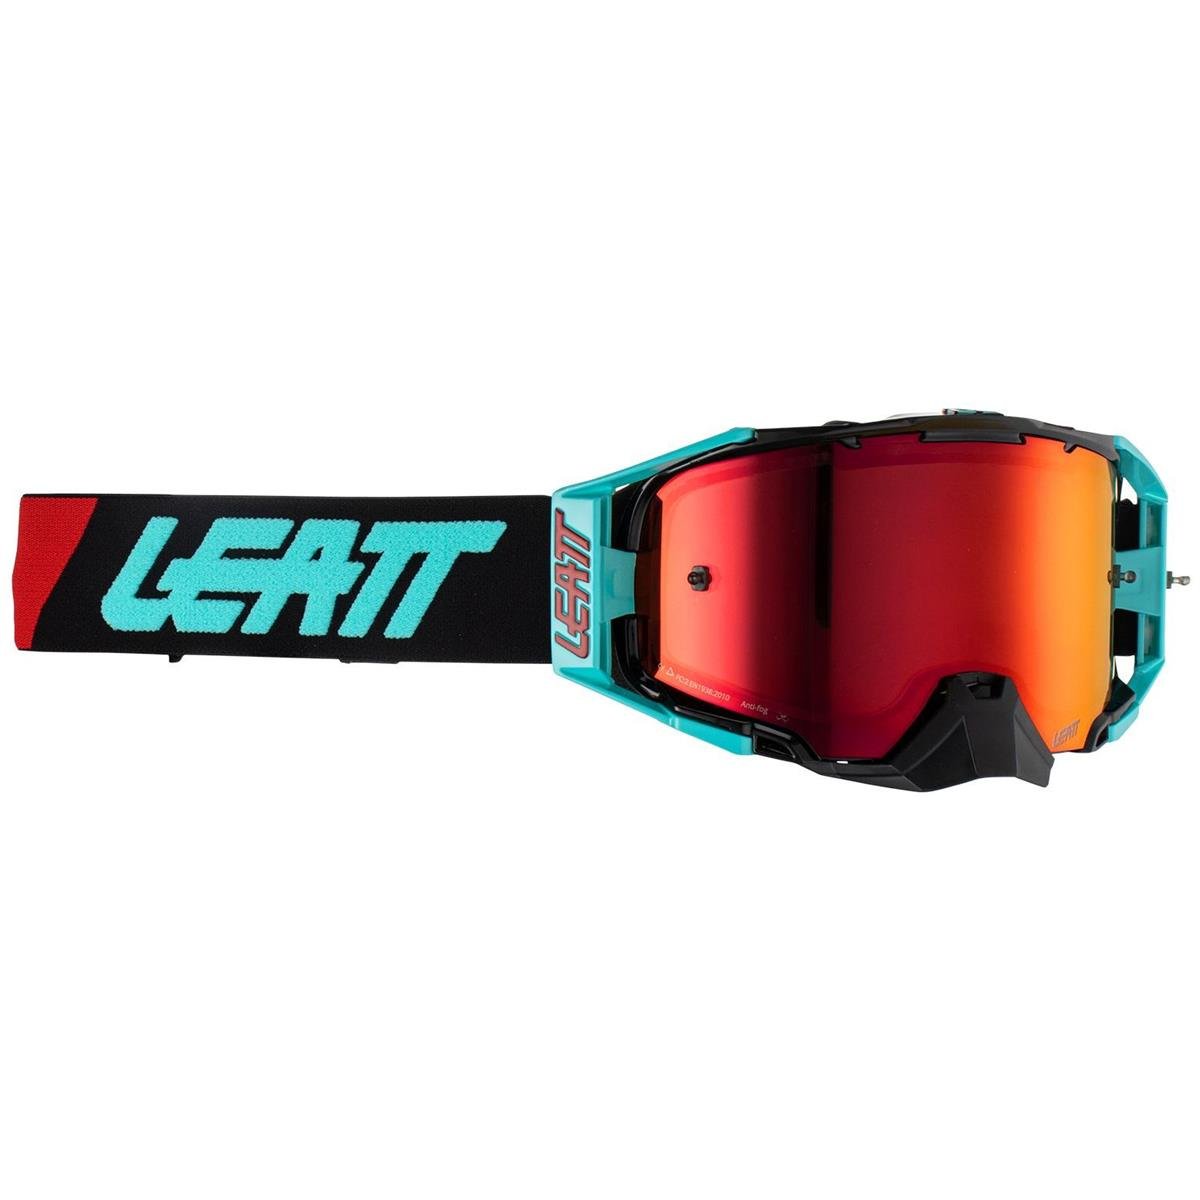 Leatt Crossbrille Velocity 6.5 IRIZ